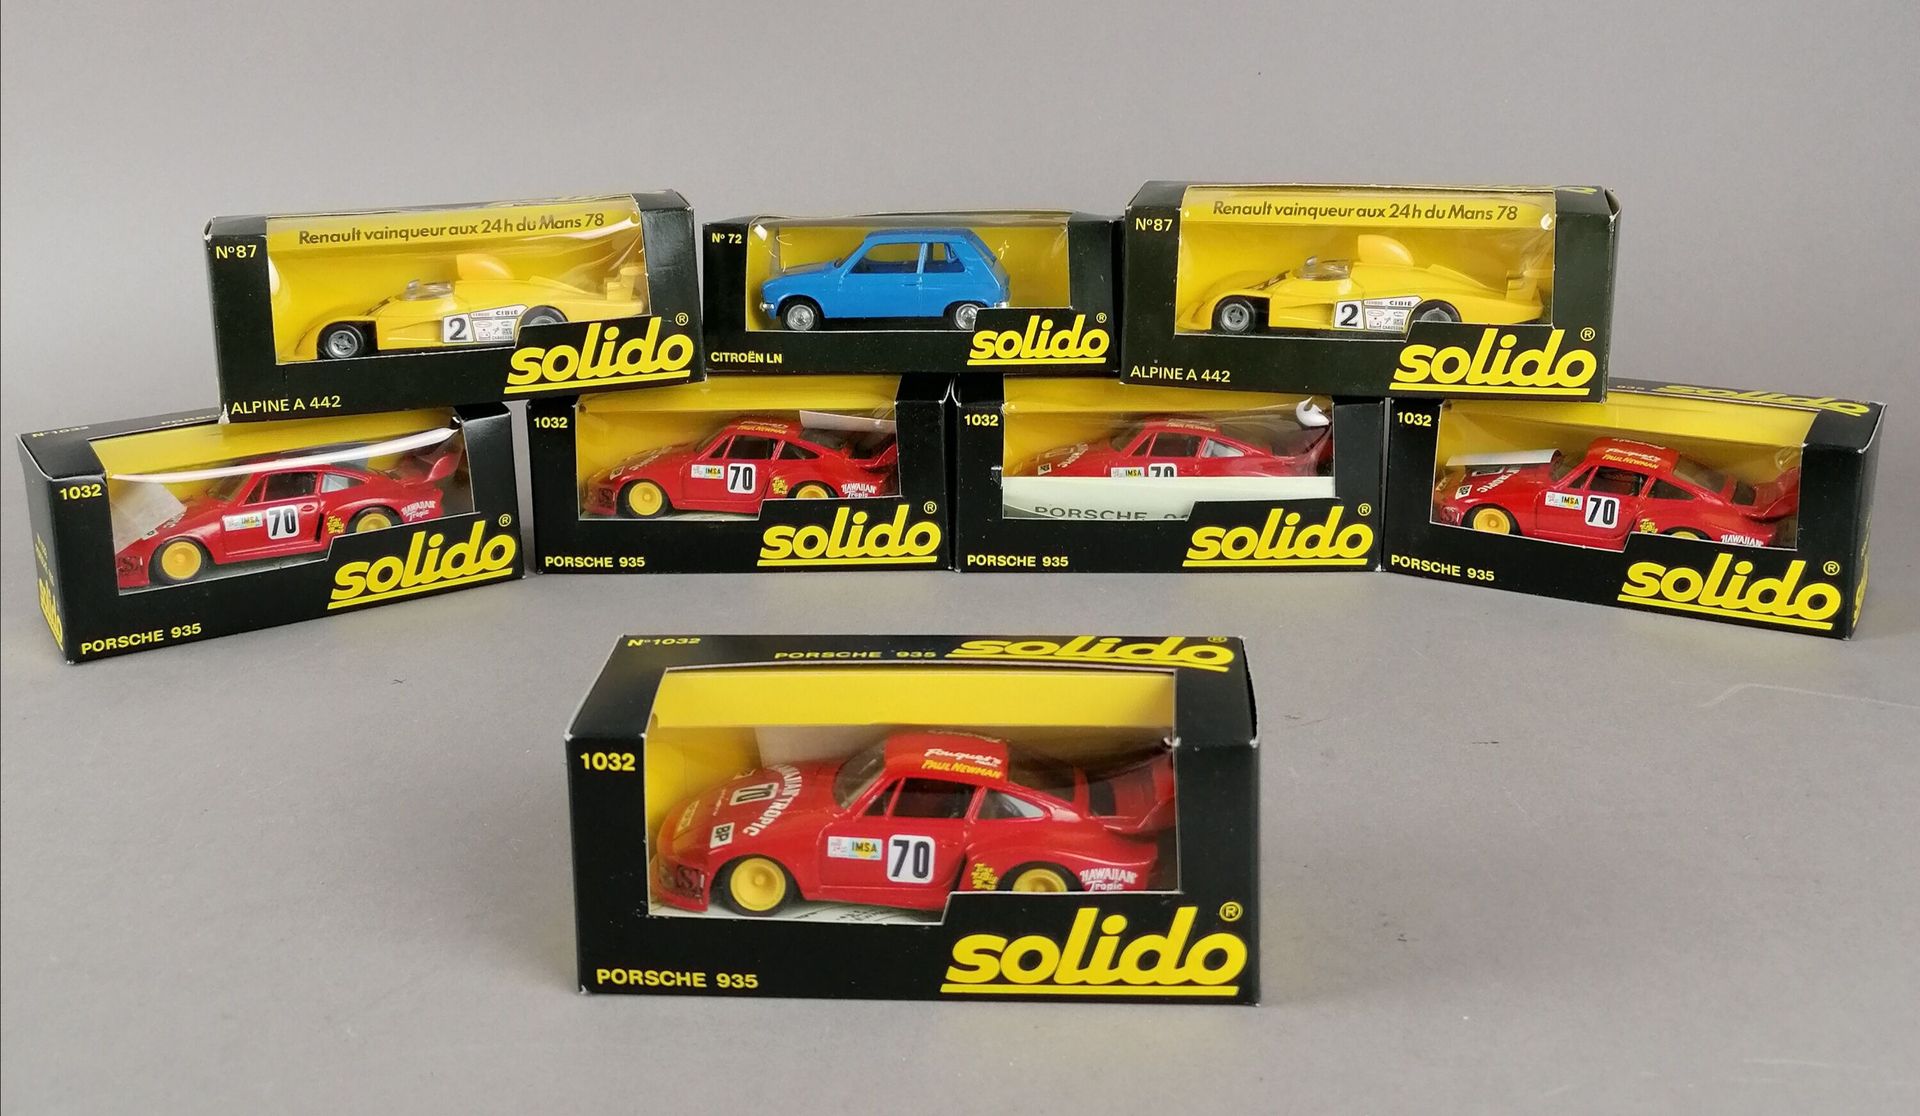 Null SOLIDO - 1/43比例的车辆在其原始包装盒中。

19x保时捷935 n°1032

1x 保时捷924 n°1051

2个阿尔卑斯山A 4&hellip;